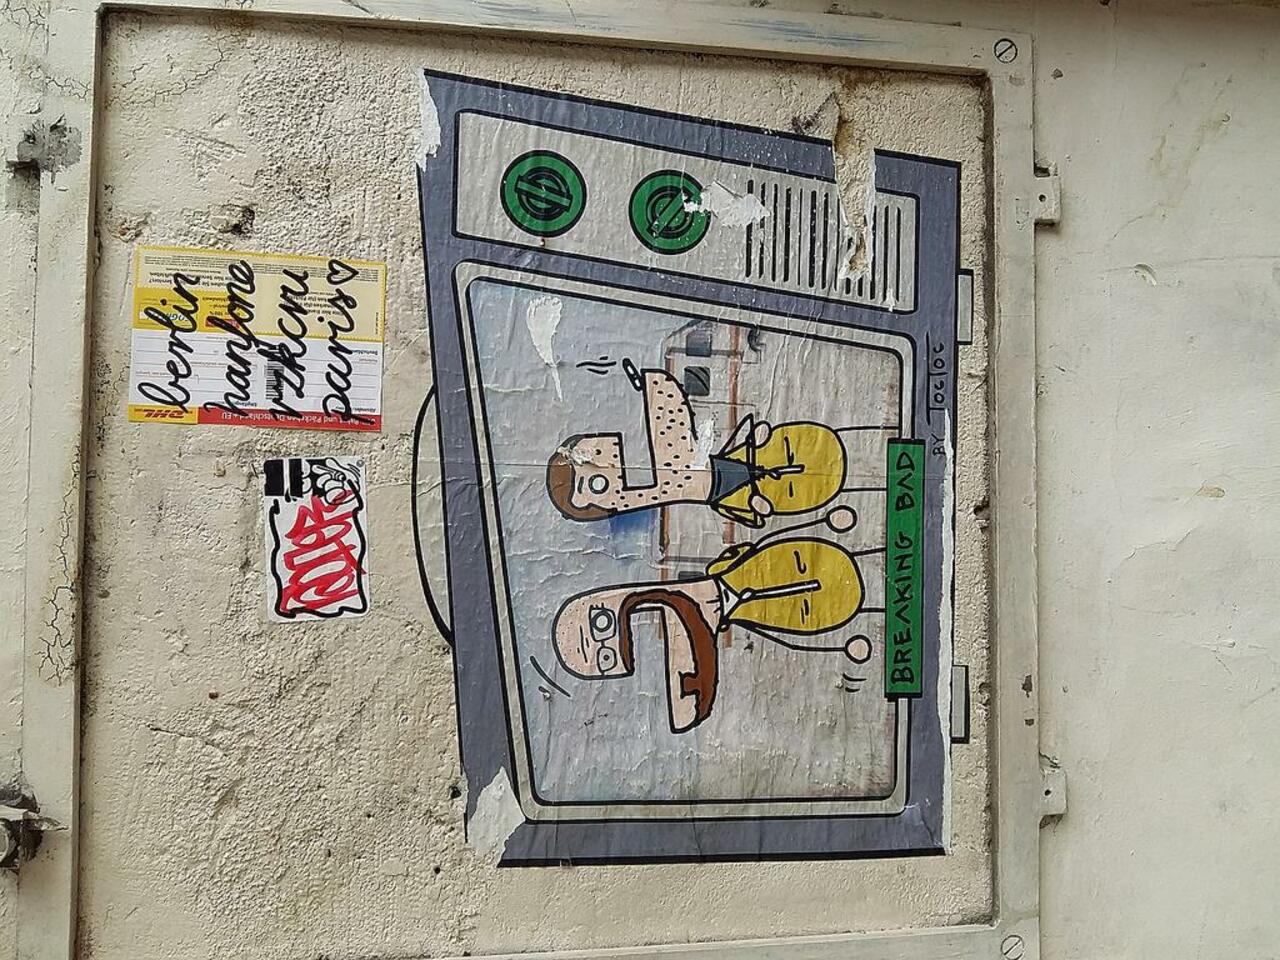 Street Art by TocToc in #Paris http://www.urbacolors.com #art #mural #graffiti #streetart http://t.co/7v54FLcltG